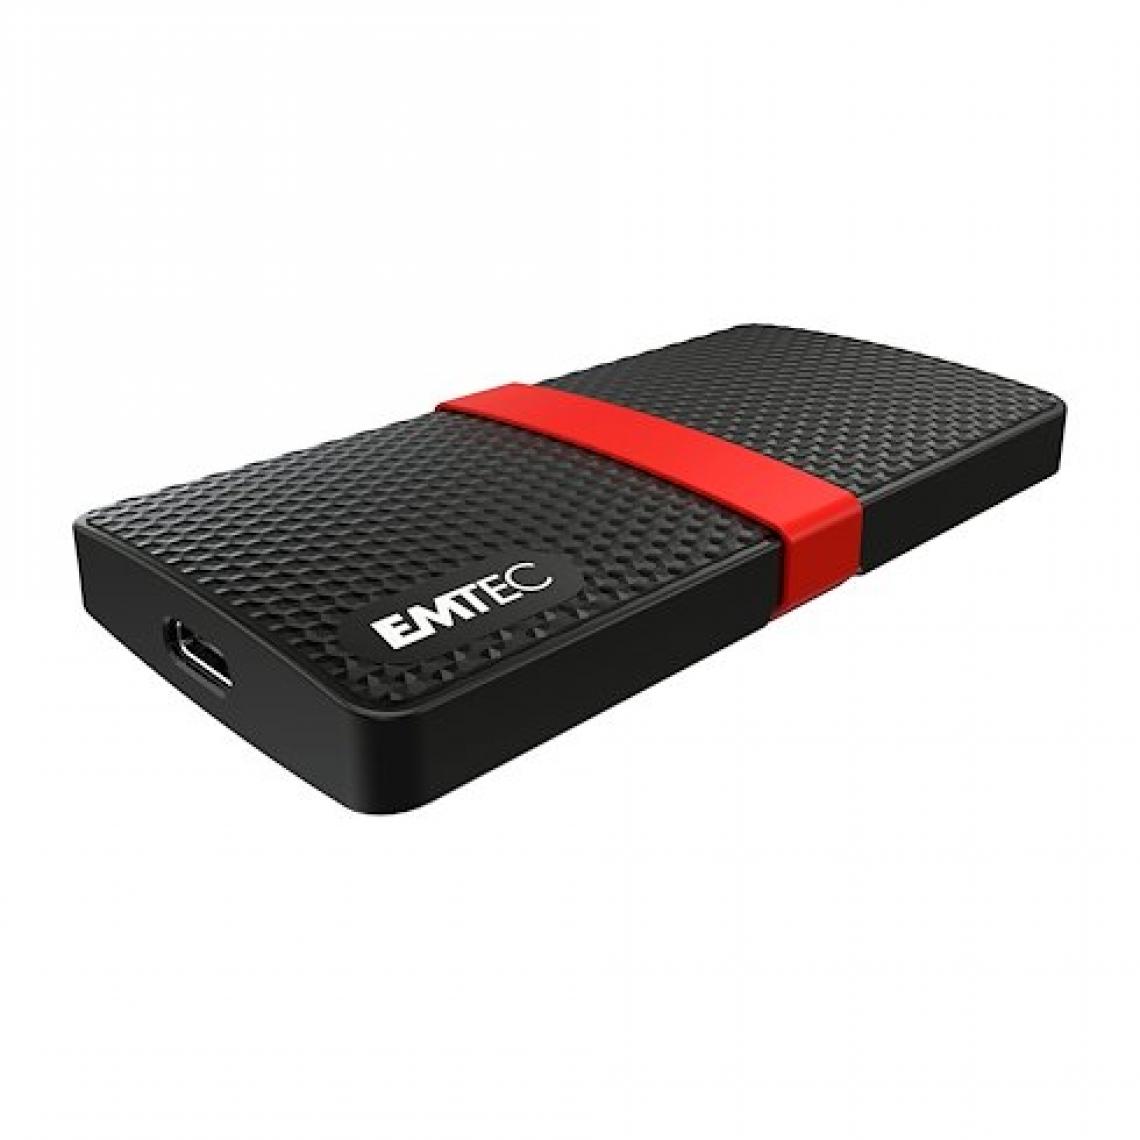 Emtec - Disque externe SSD Emtec X200 512 Go - Disque Dur interne